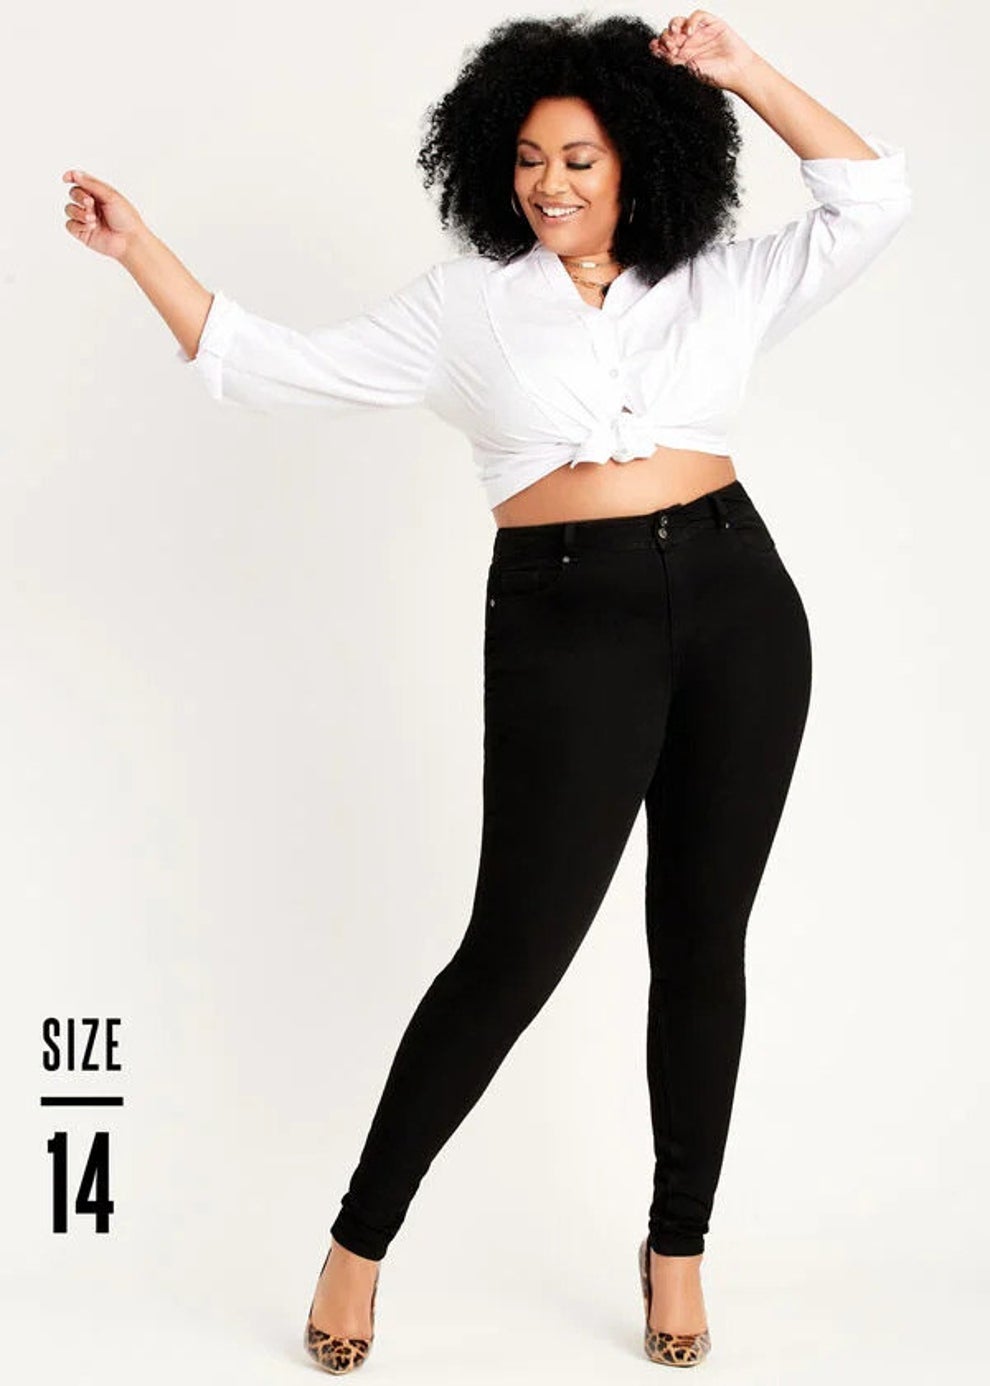 Plus Size High Rise Cutout Leggings, Black, 22/24 - Ashley Stewart